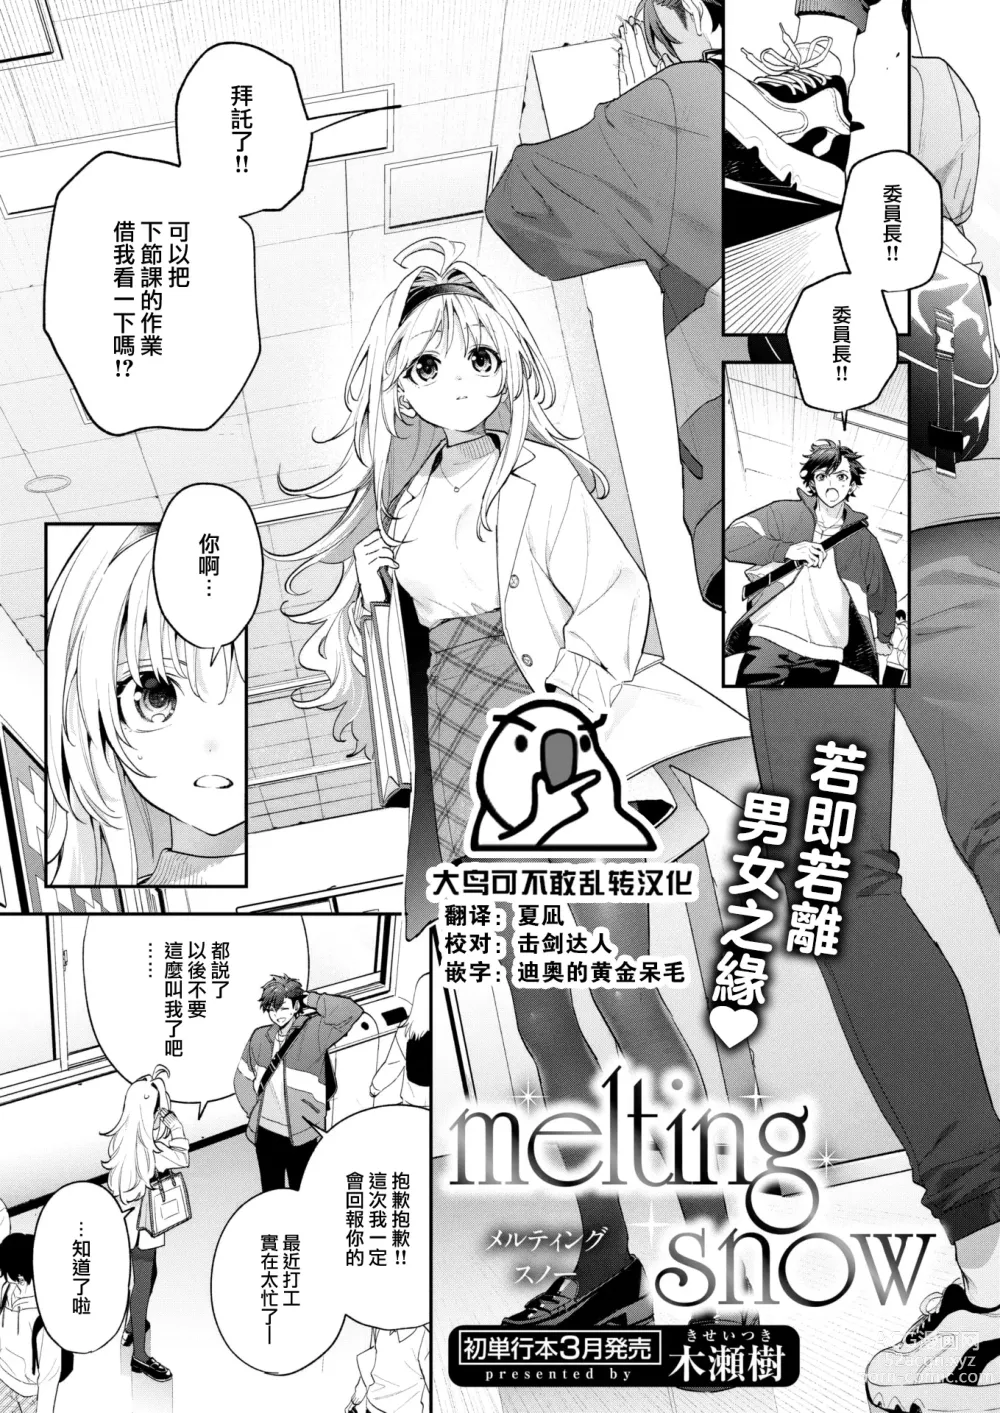 Page 1 of manga melting snow